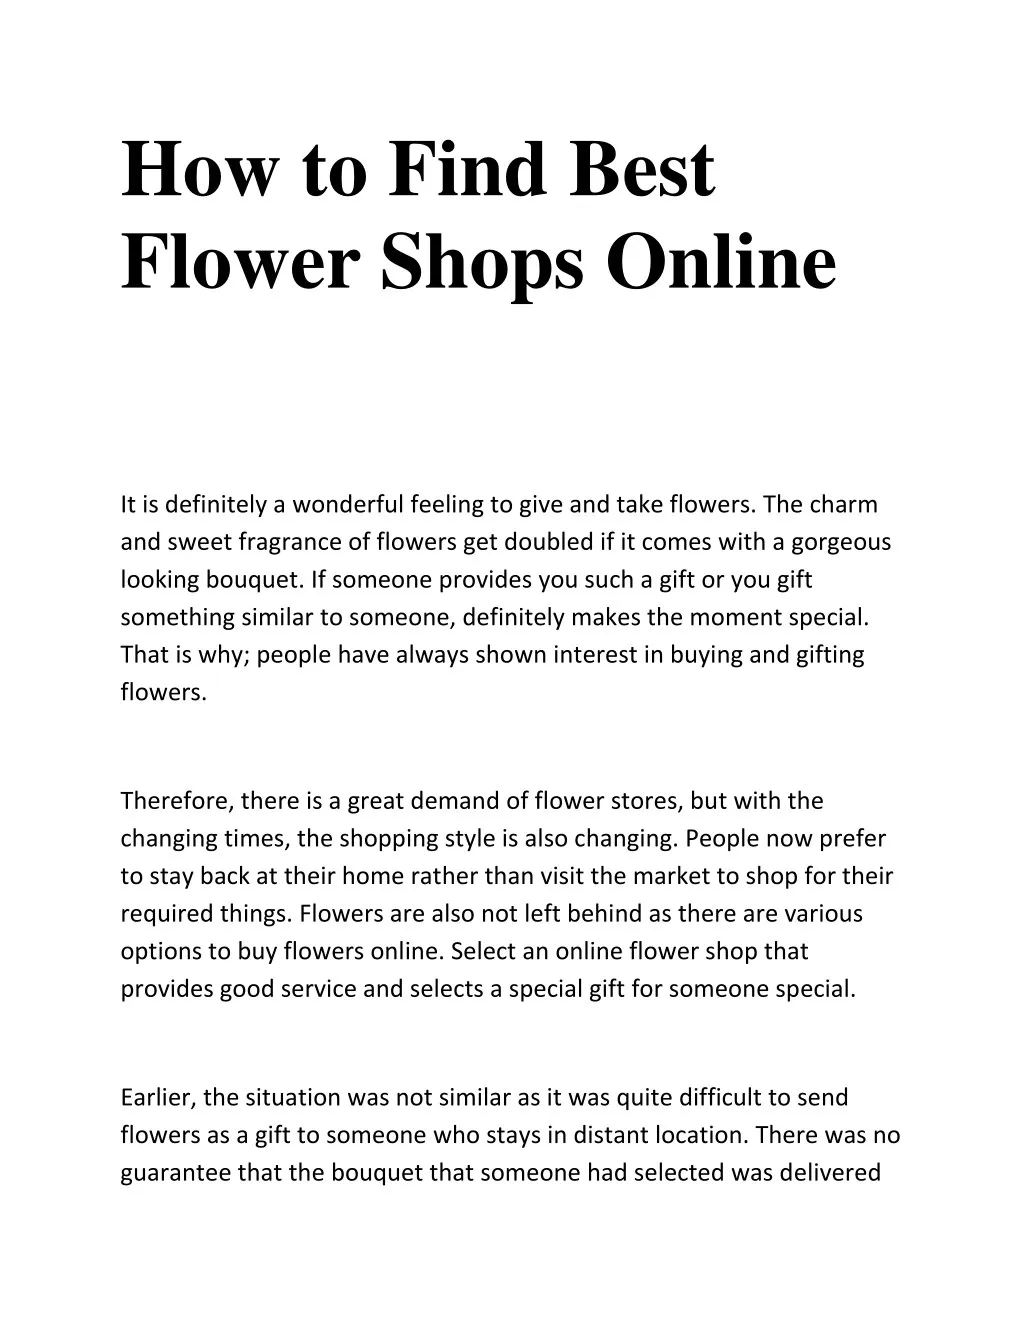 how to find best flower shops online